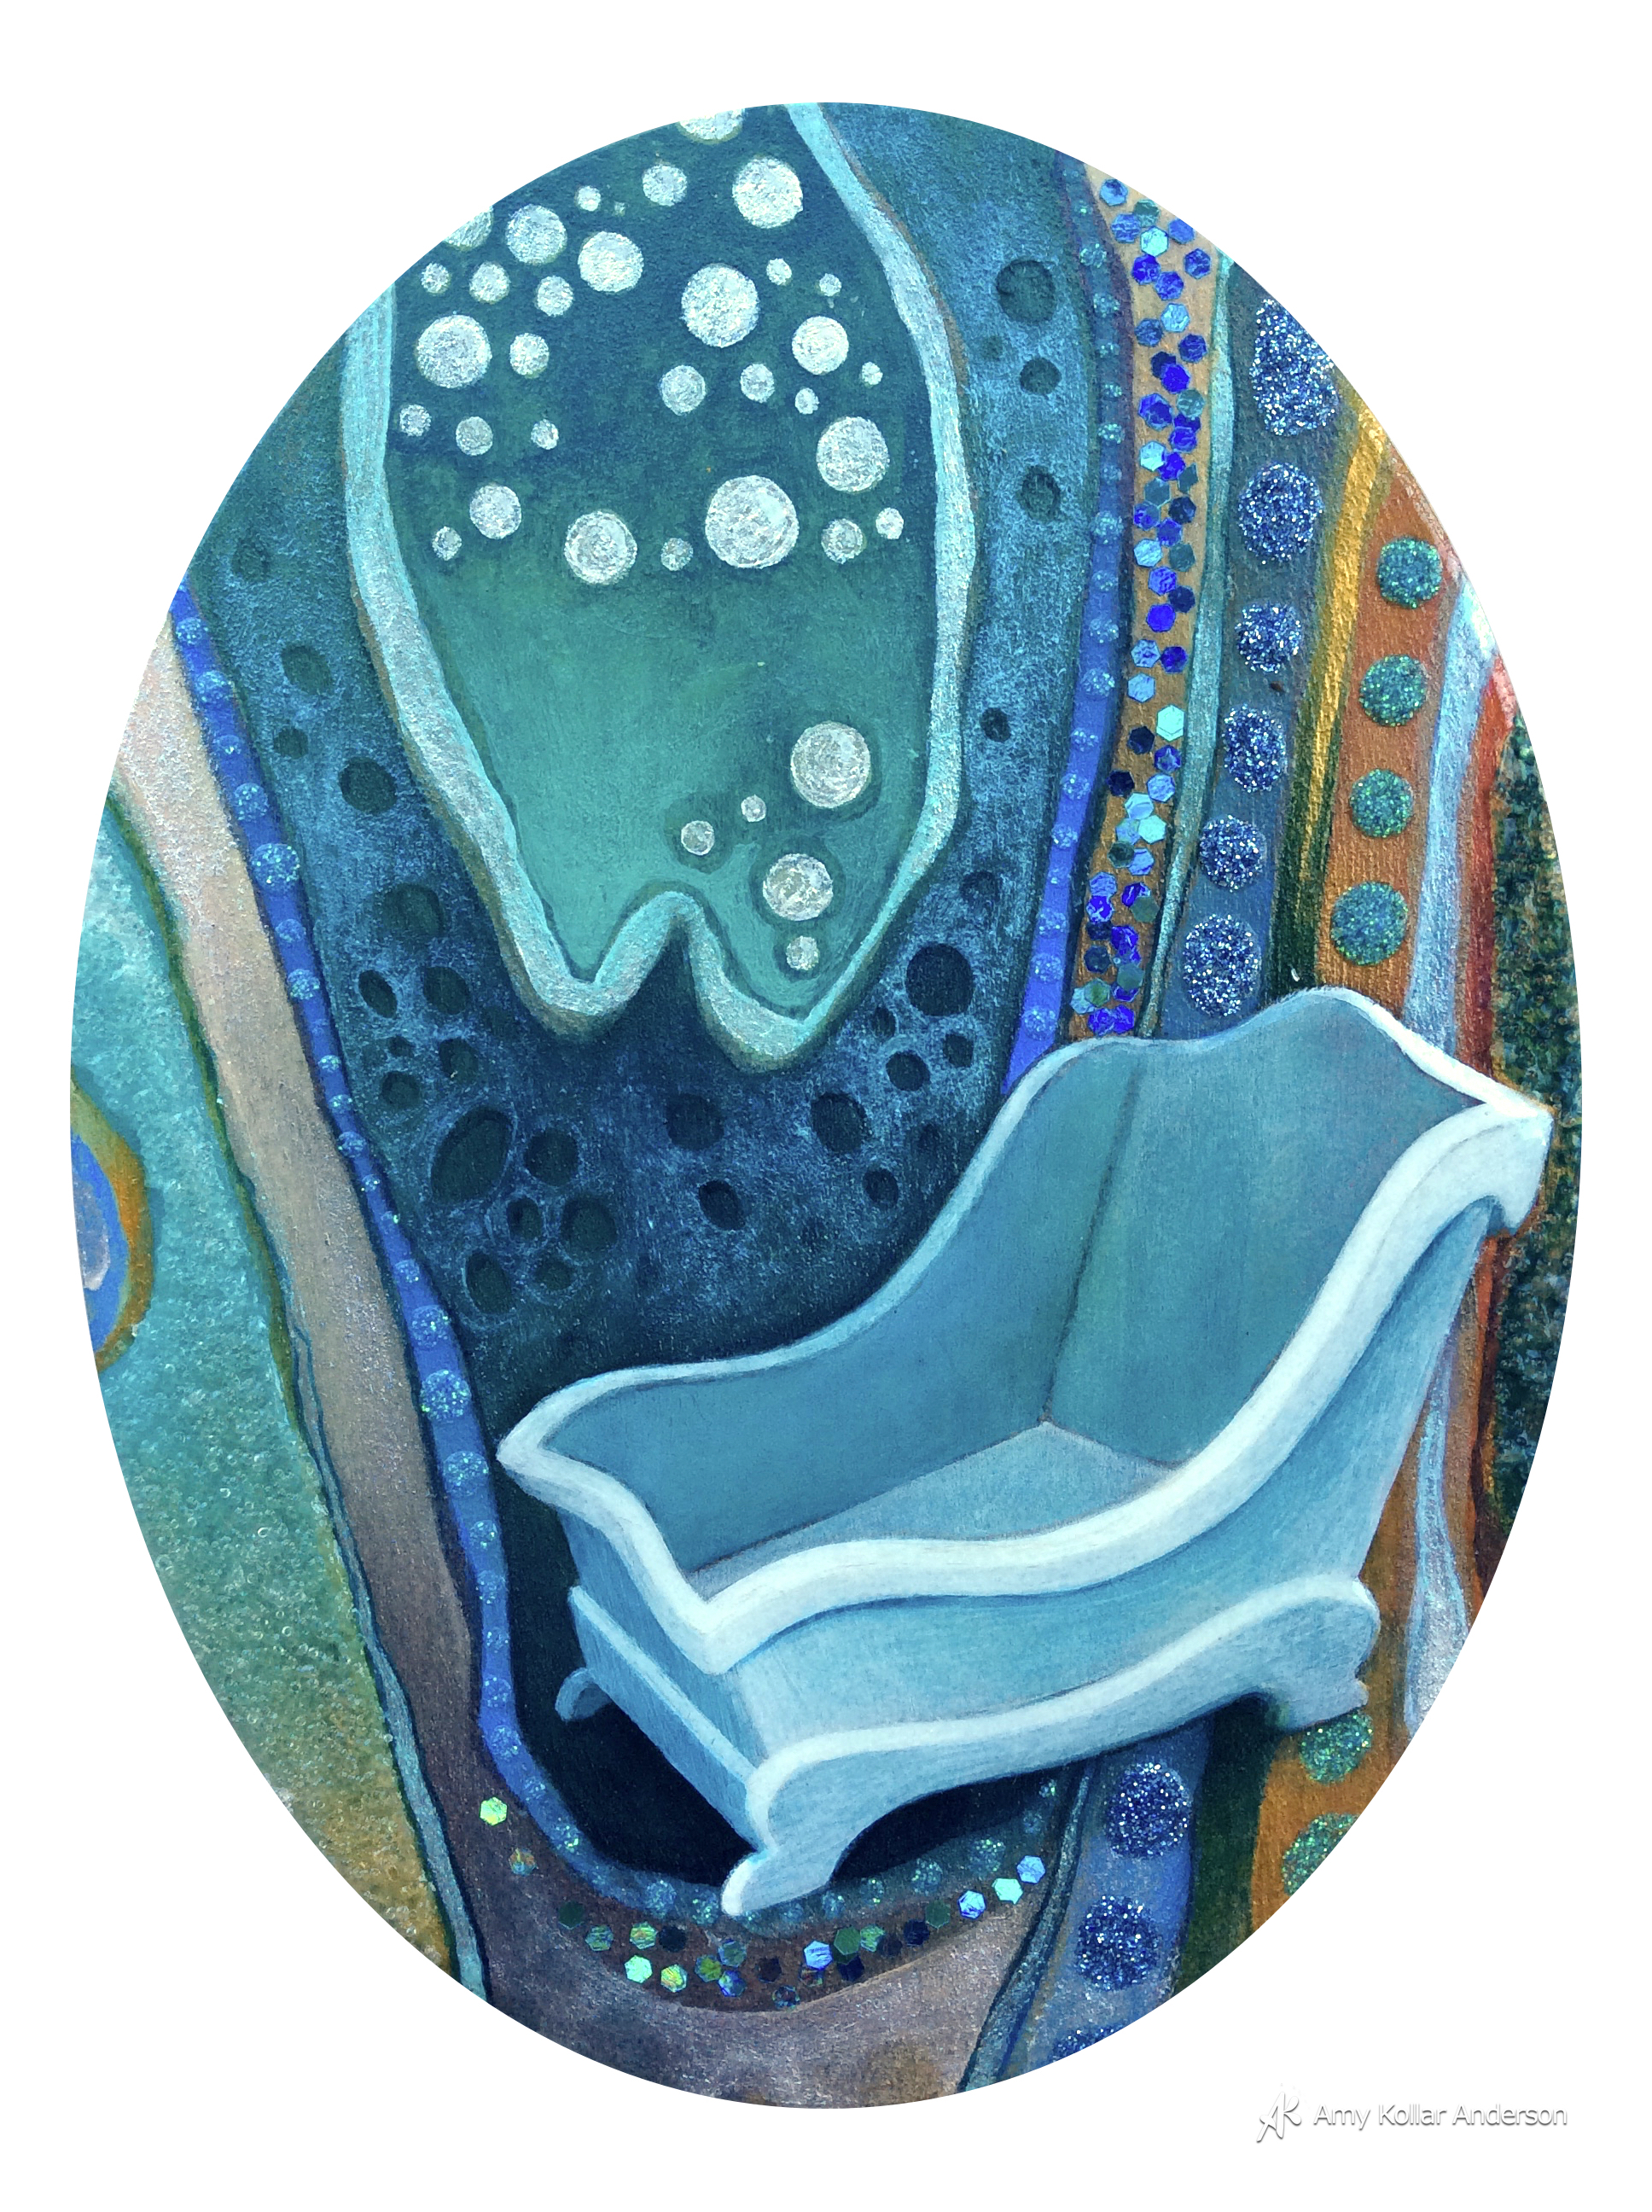    Little Tub   :&nbsp; acrylic paint, pouring medium and glitter :&nbsp;6" x 8" x 1" : 2015   Available    